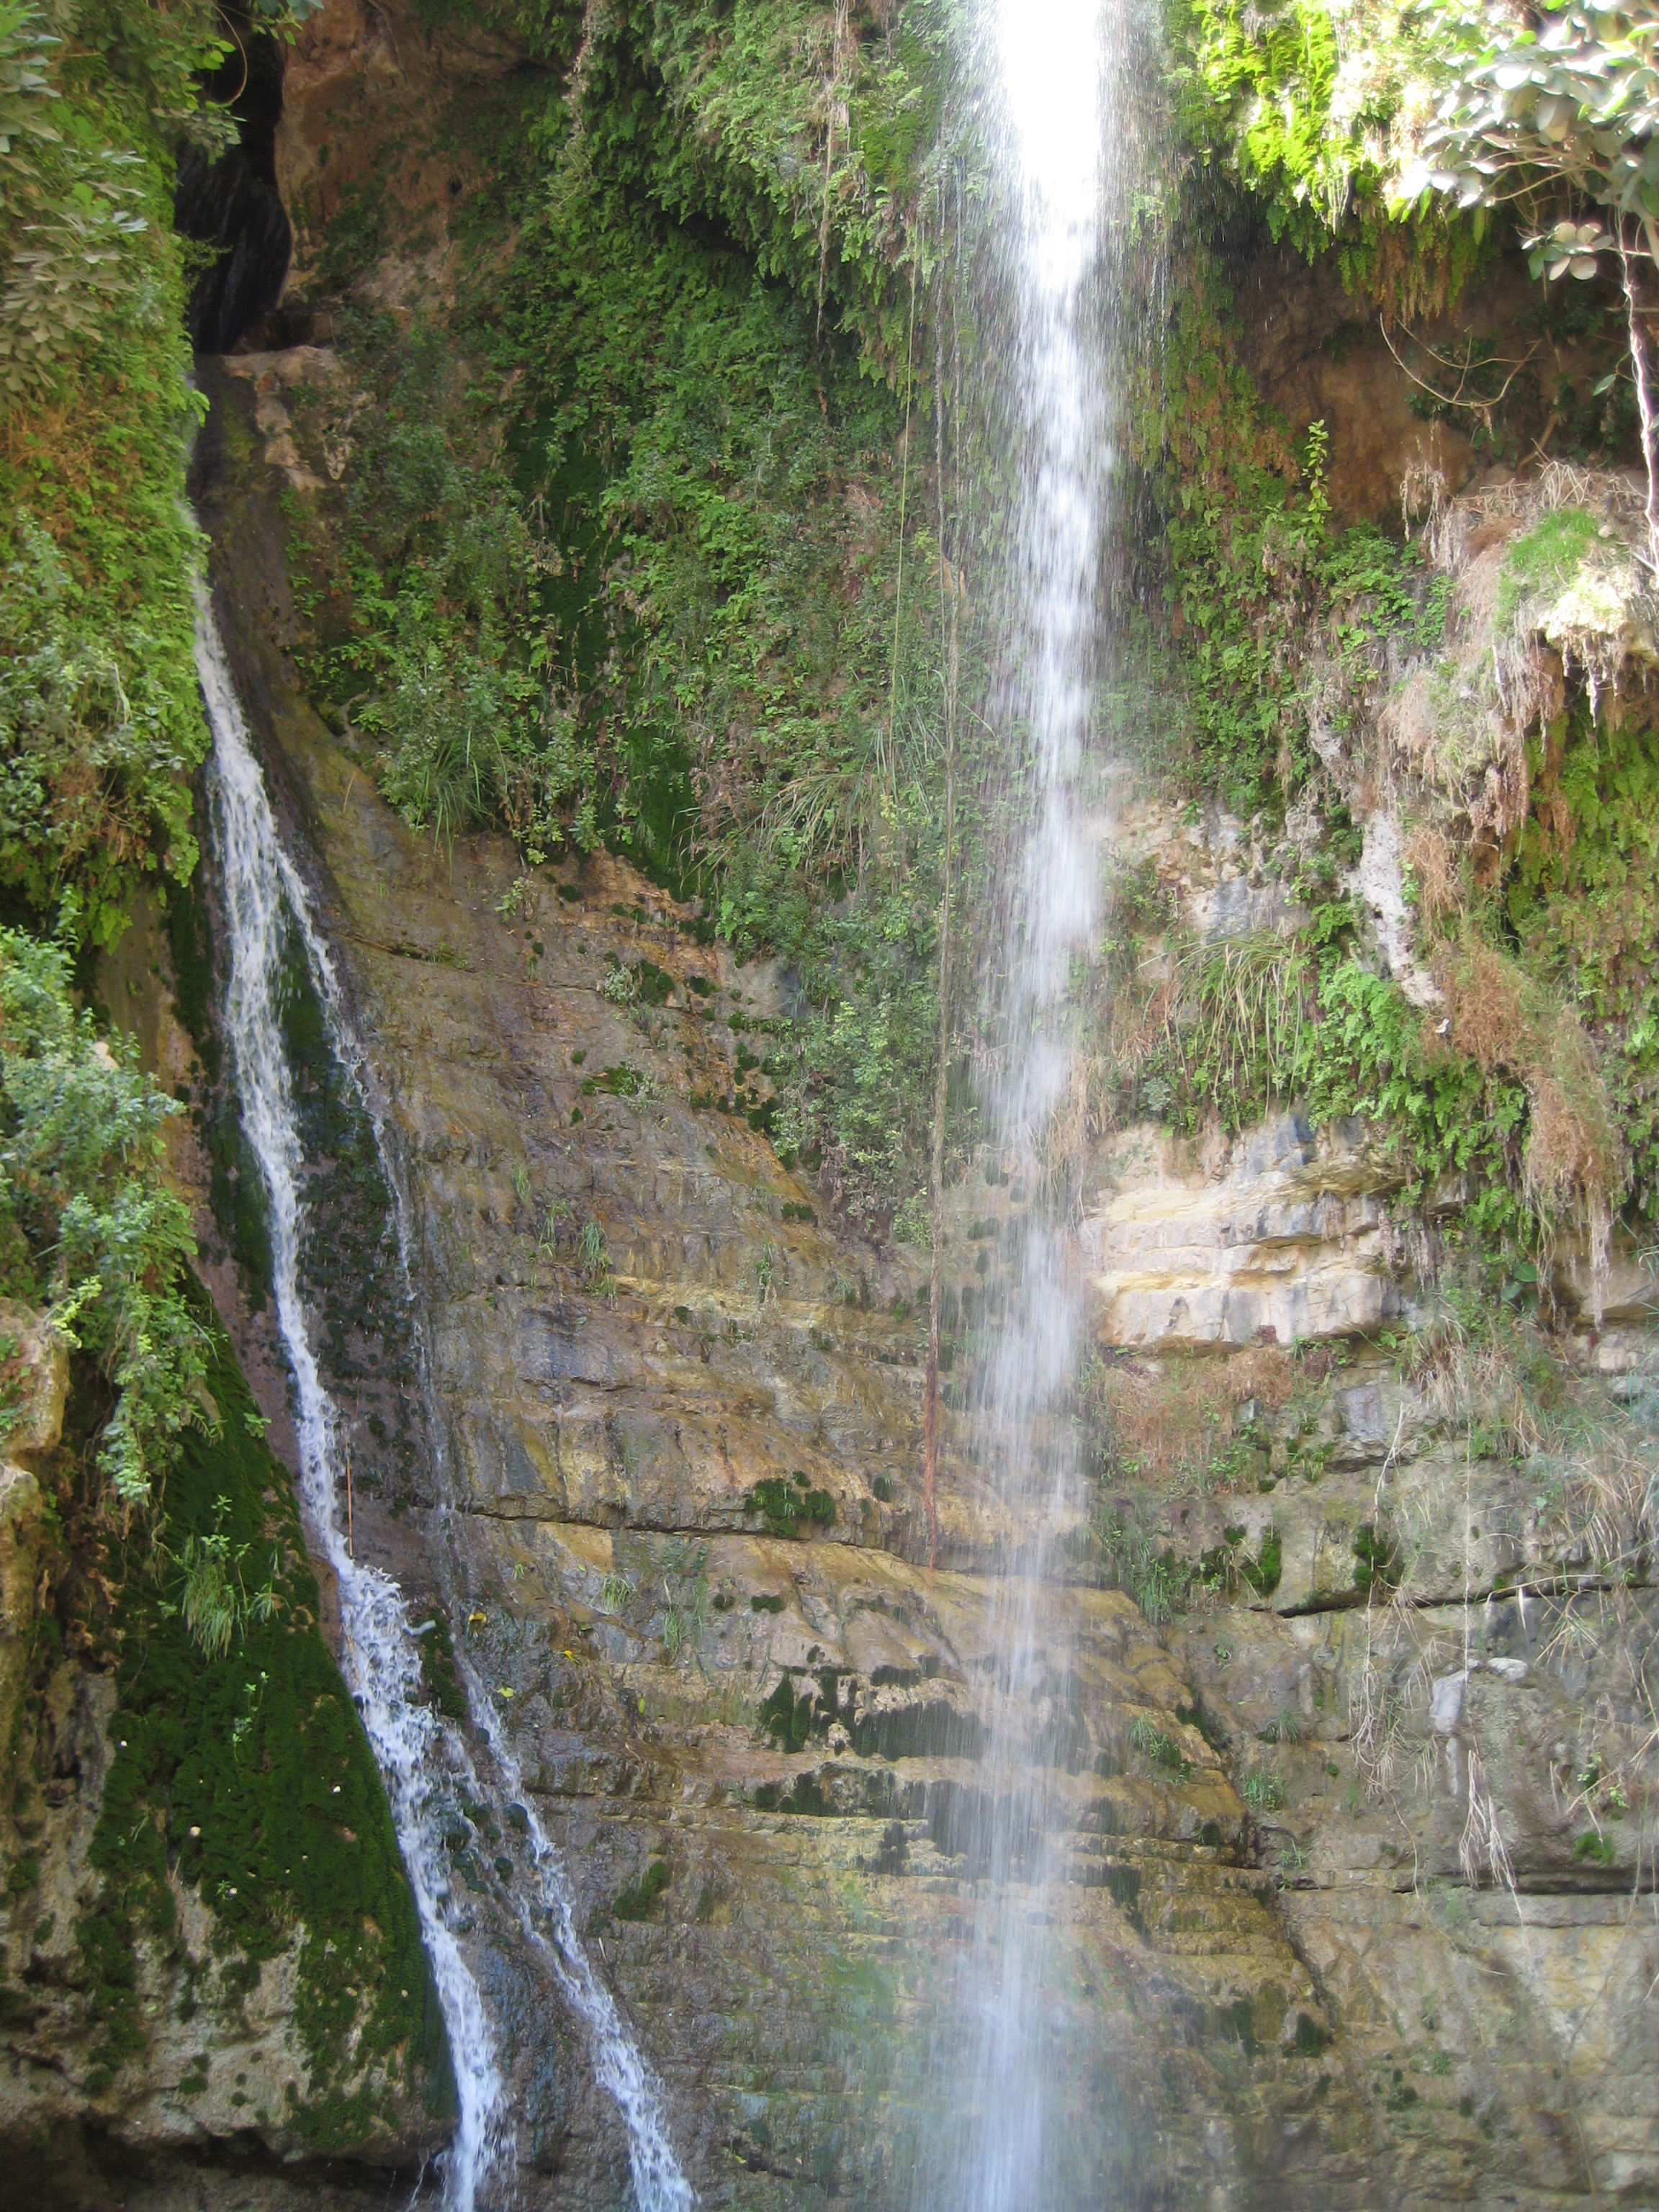 File:Thin waterfall (4070426402).jpg - Wikimedia Commons